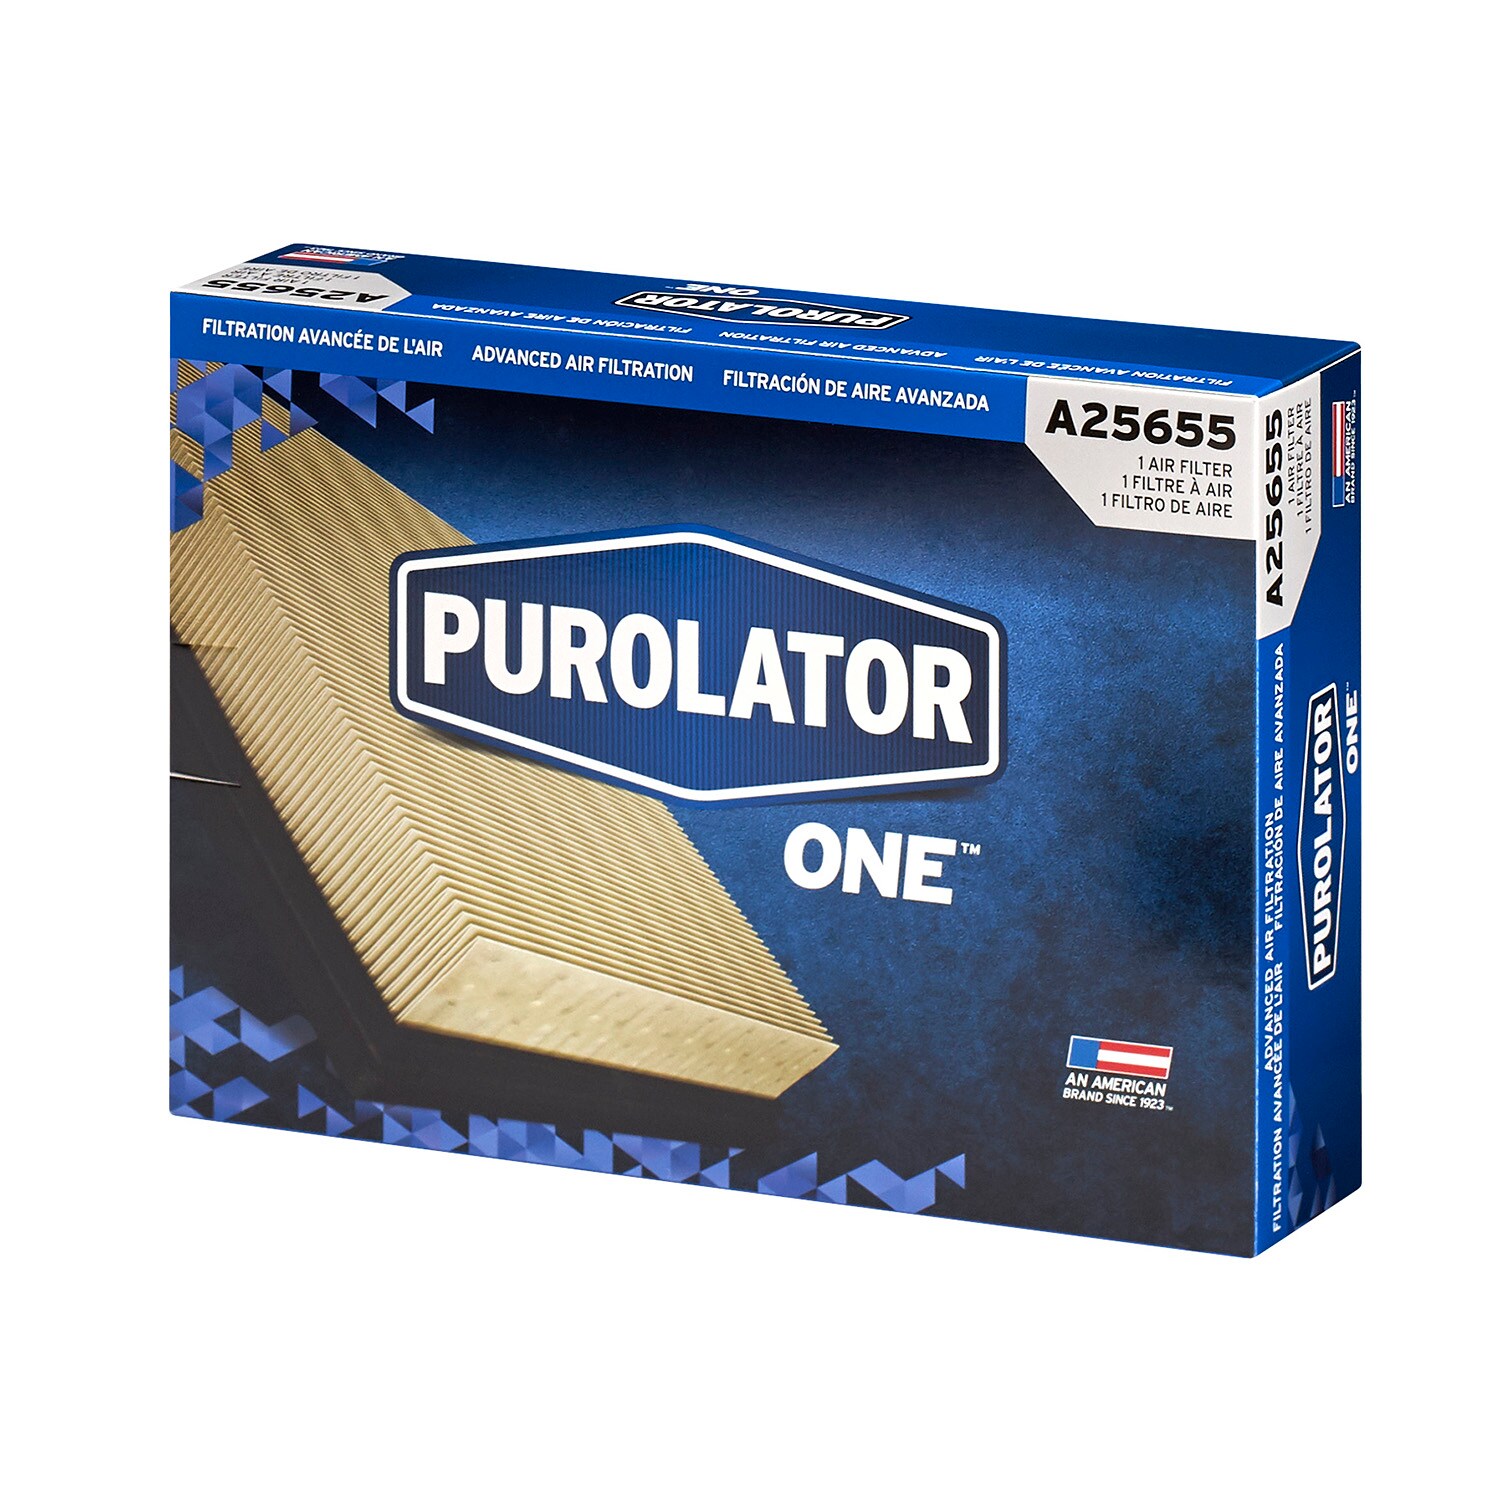 Purolator Purolator A25655 Purolatorone Advanced Air Filter, 56% OFF